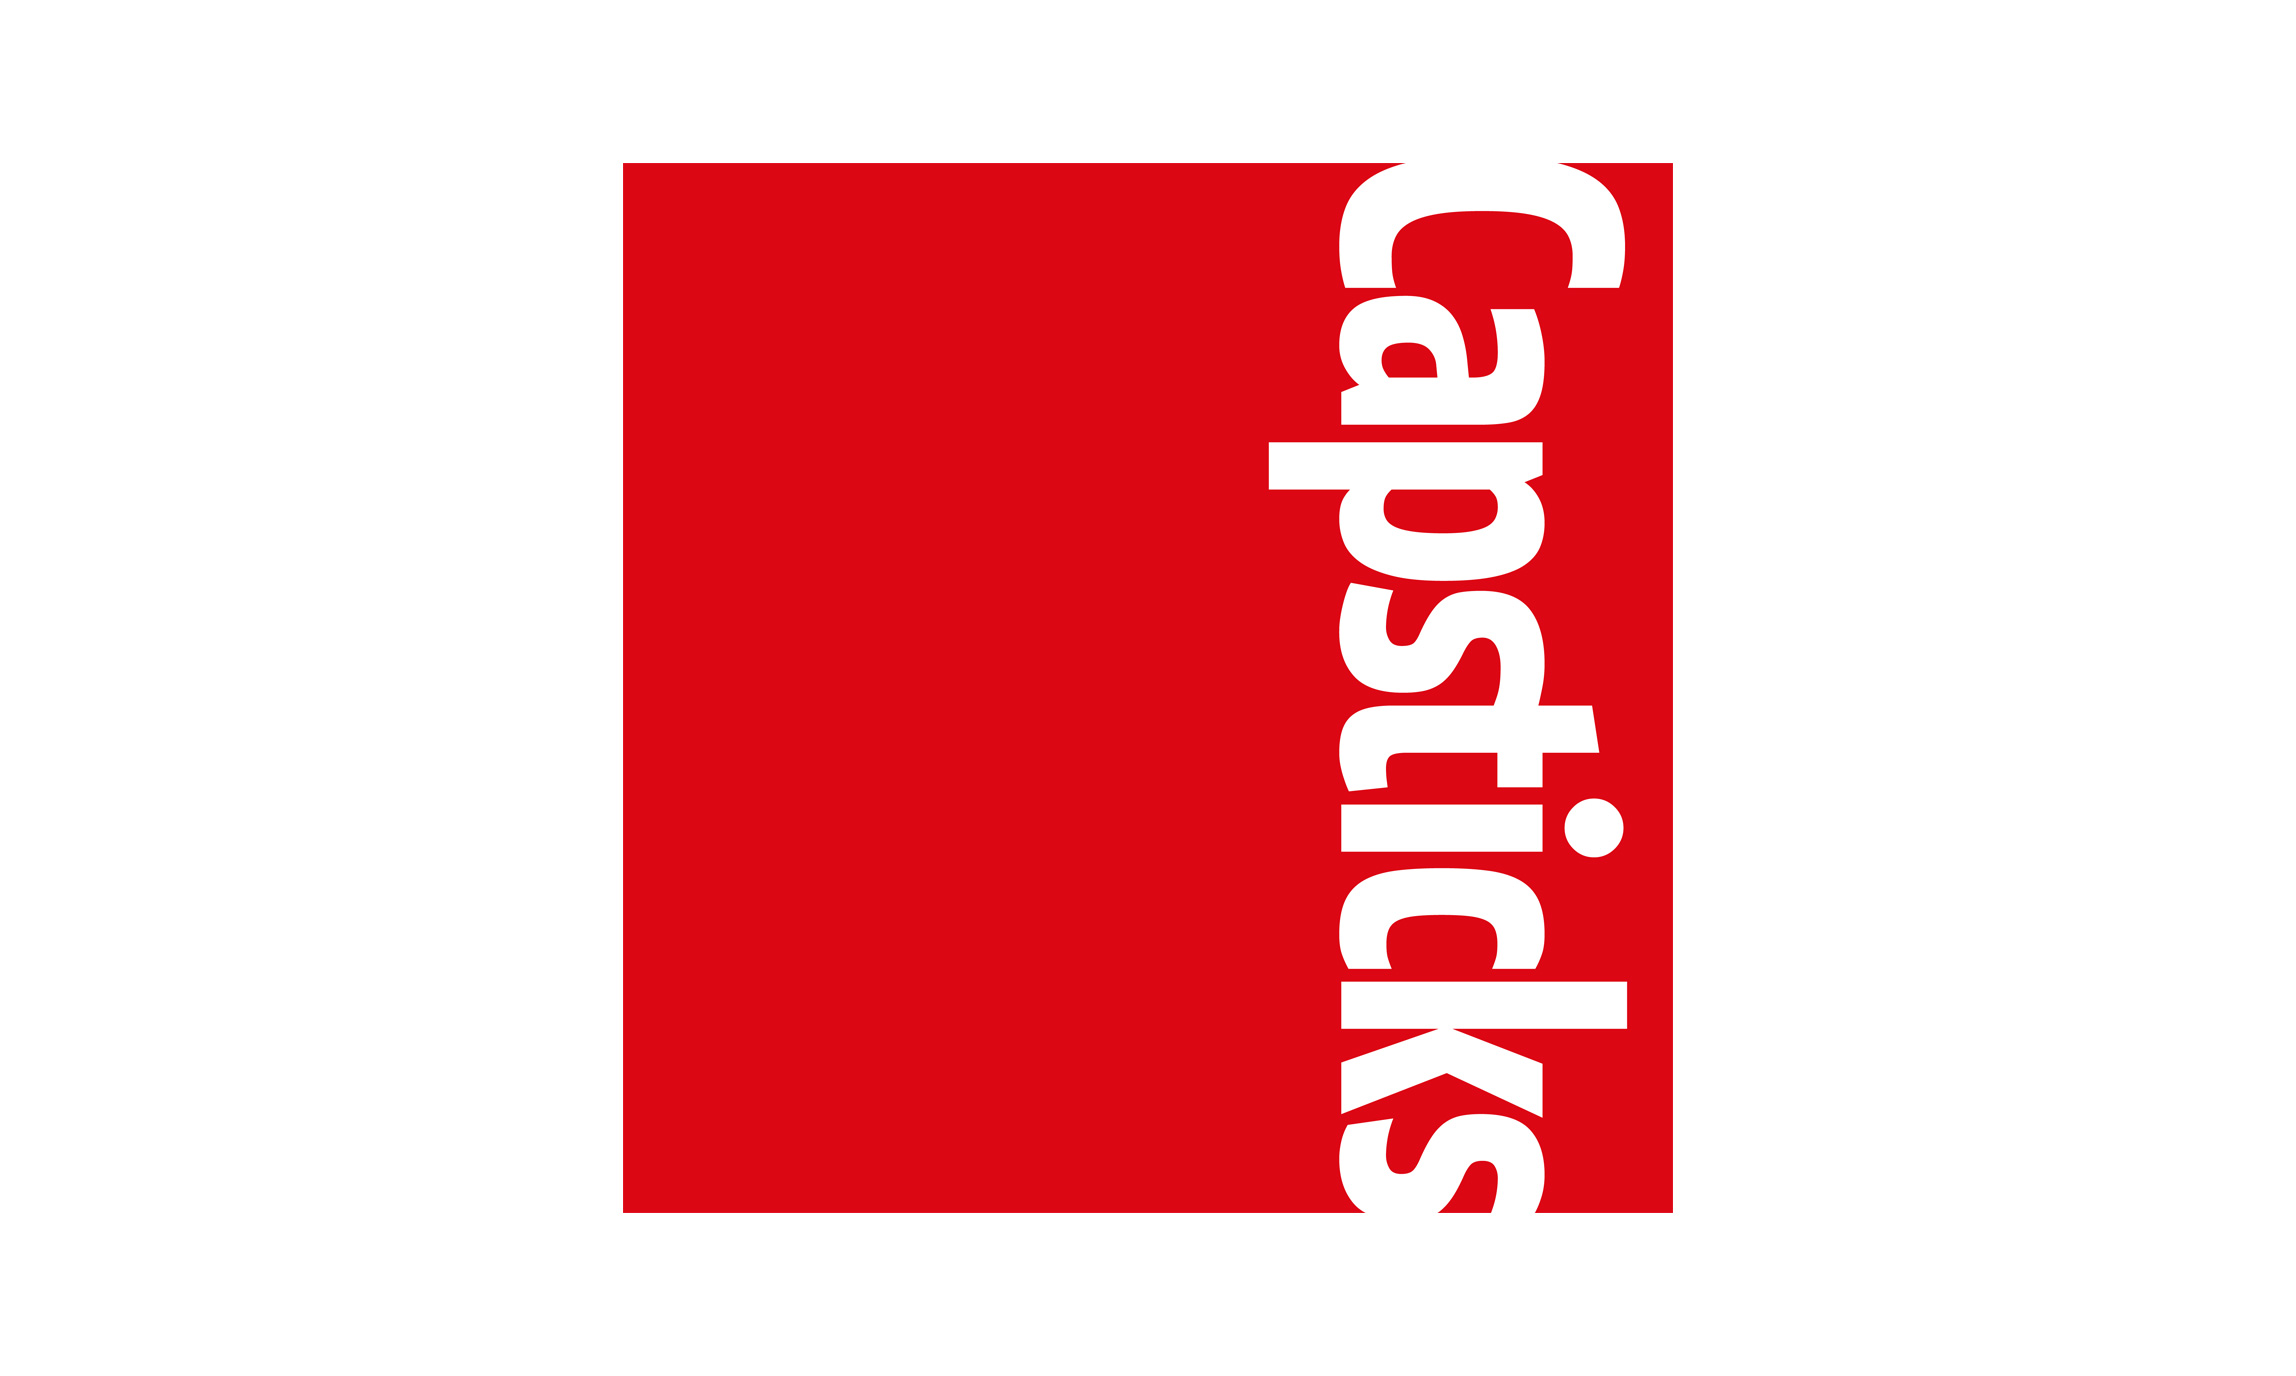 Capsticks logo in a red square